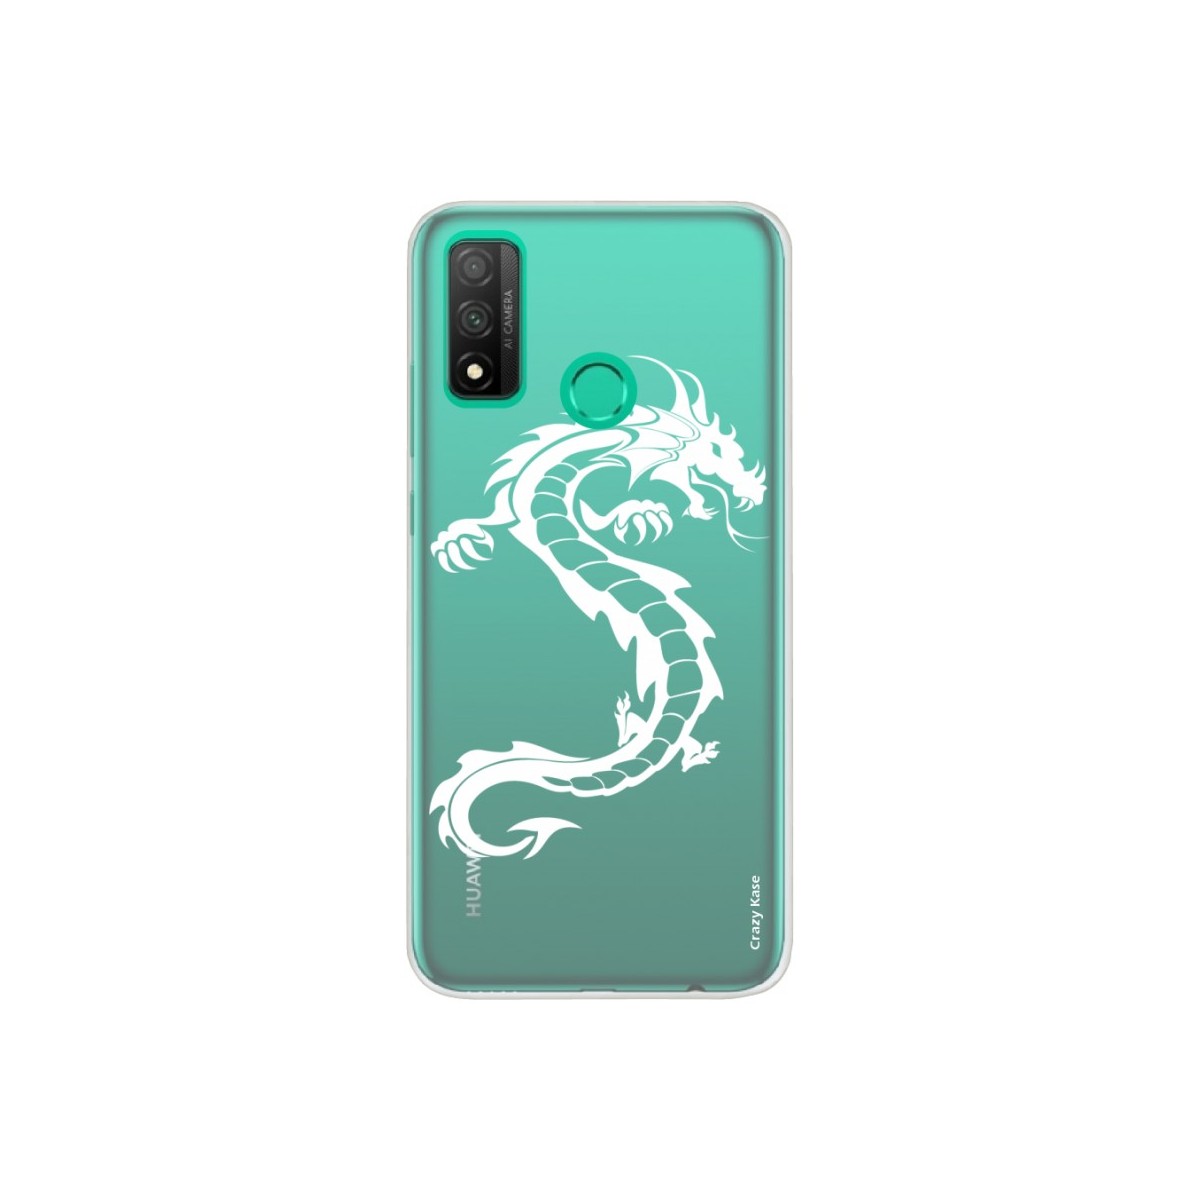 Coque Huawei P Smart 2020 souple Dragon blanc Crazy Kase